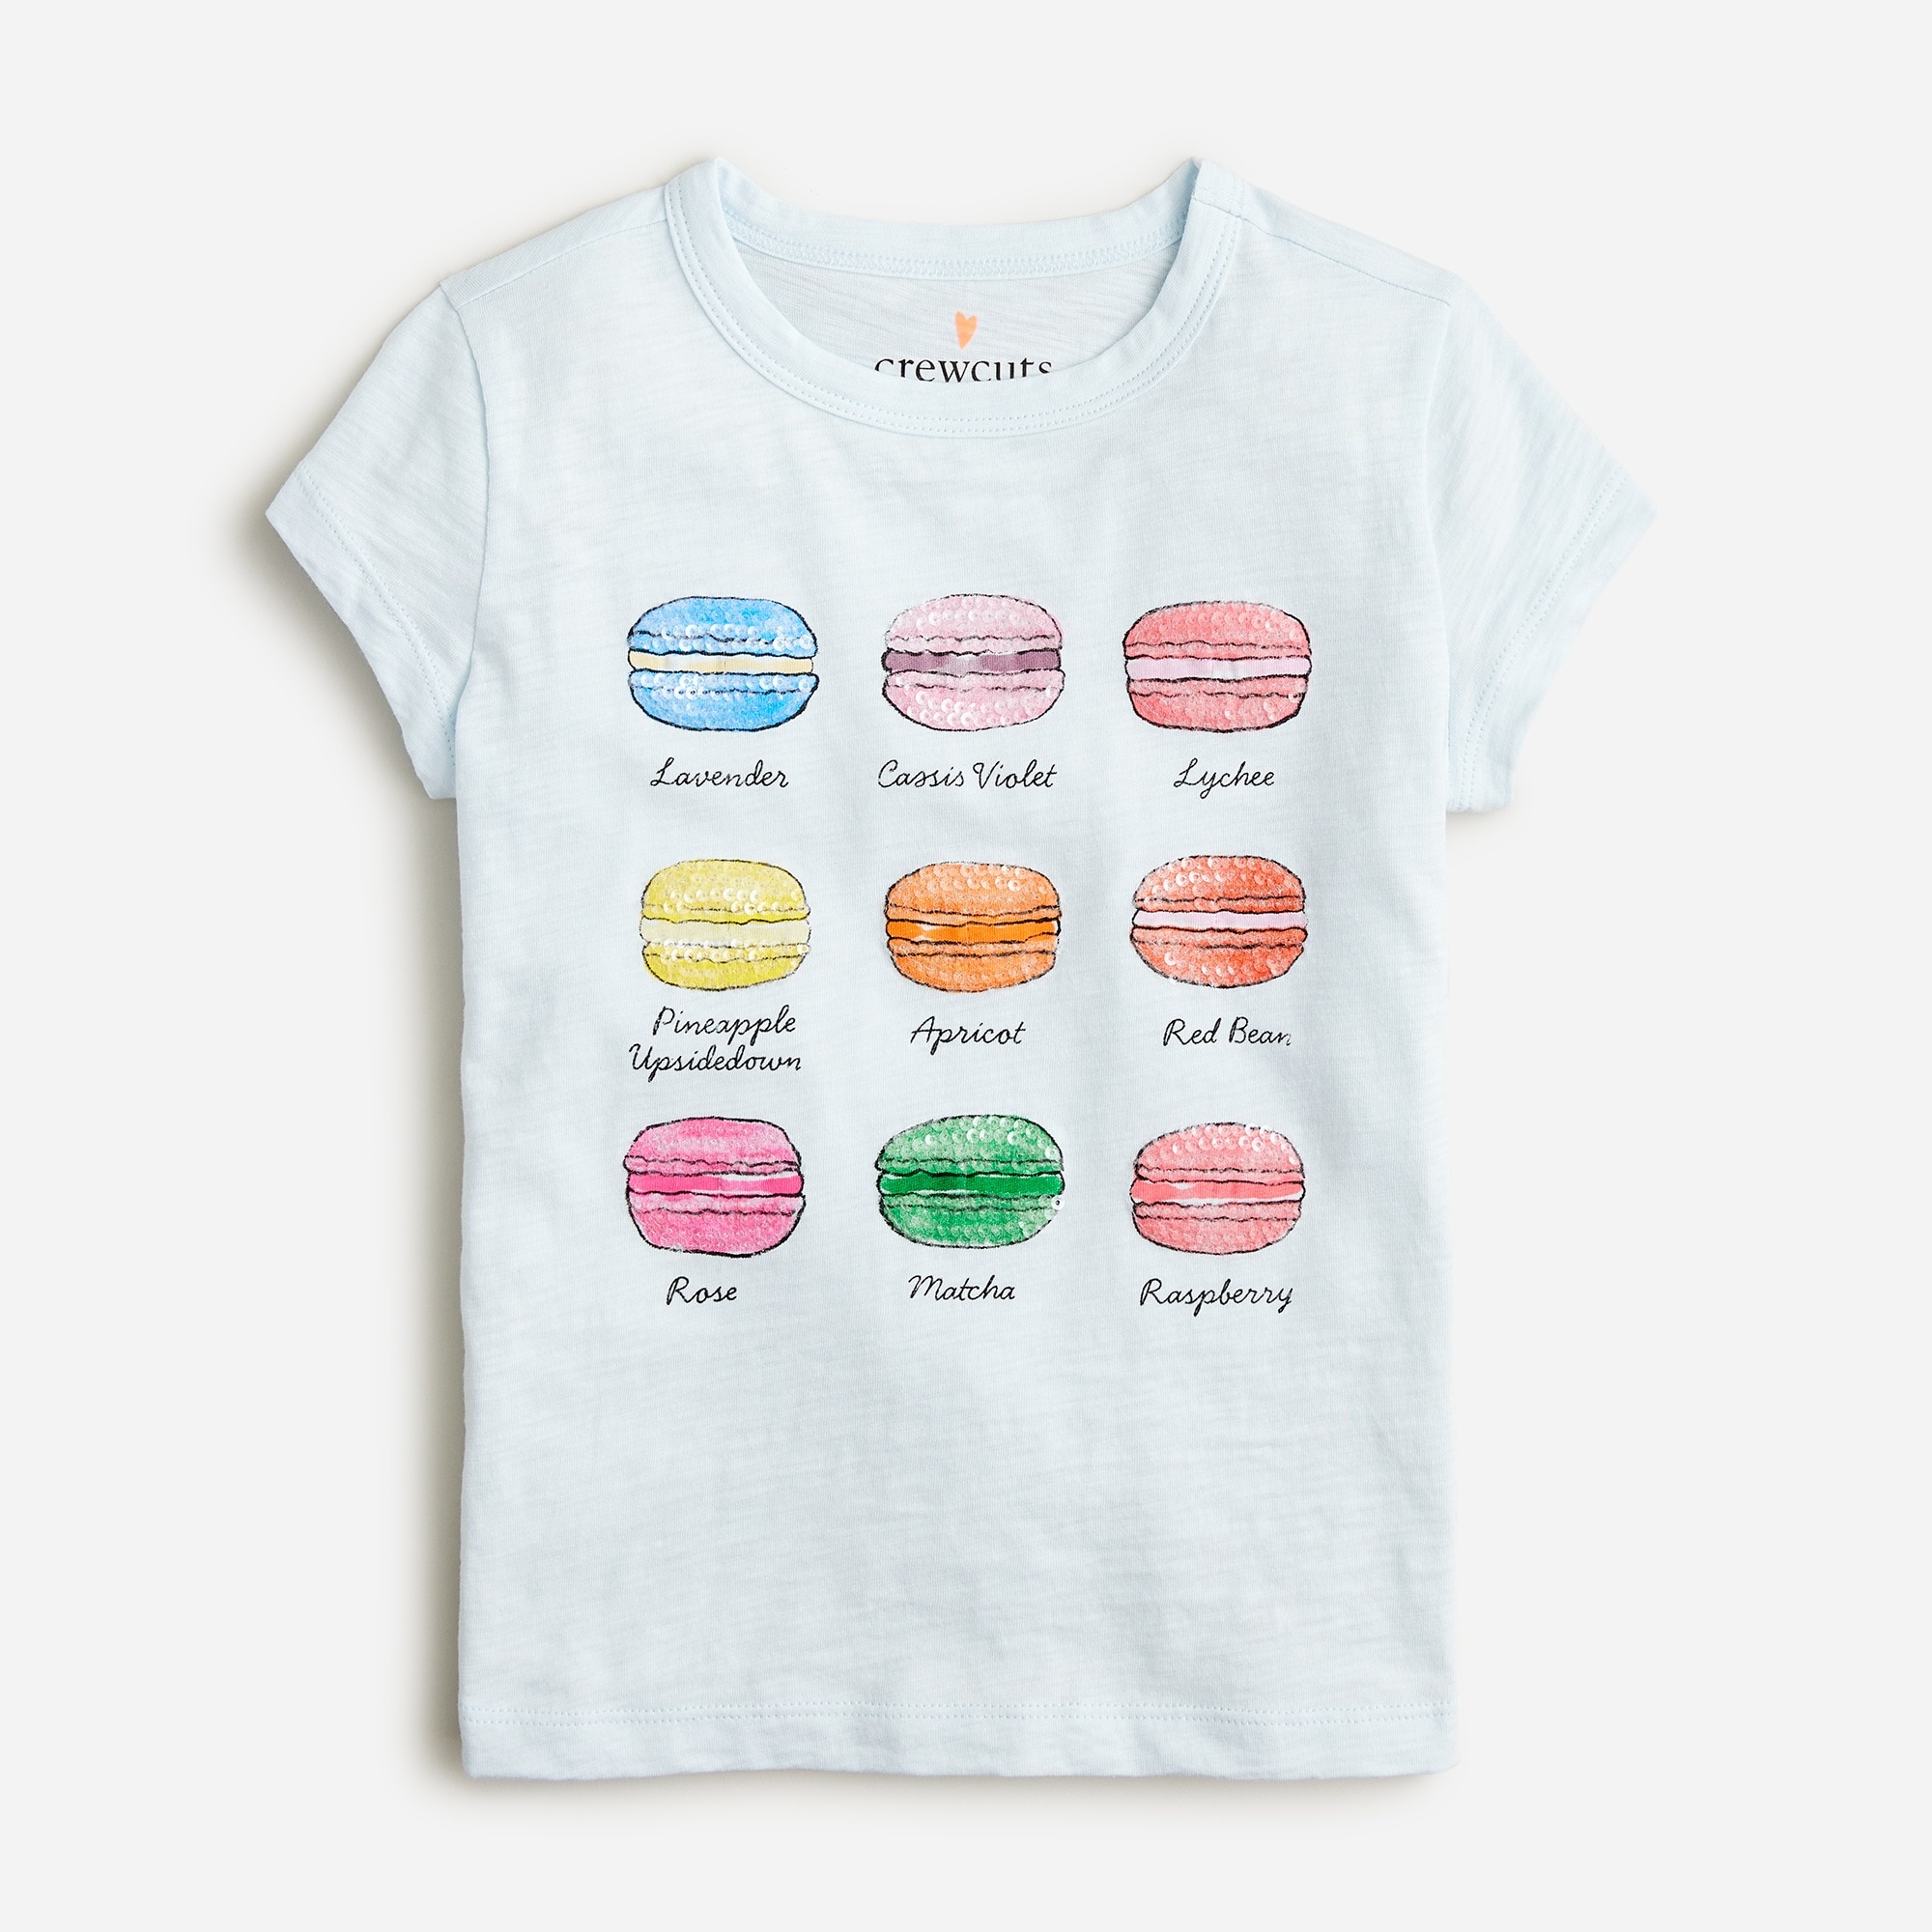  Girls' shrunken macaron graphic T-shirt with sequins